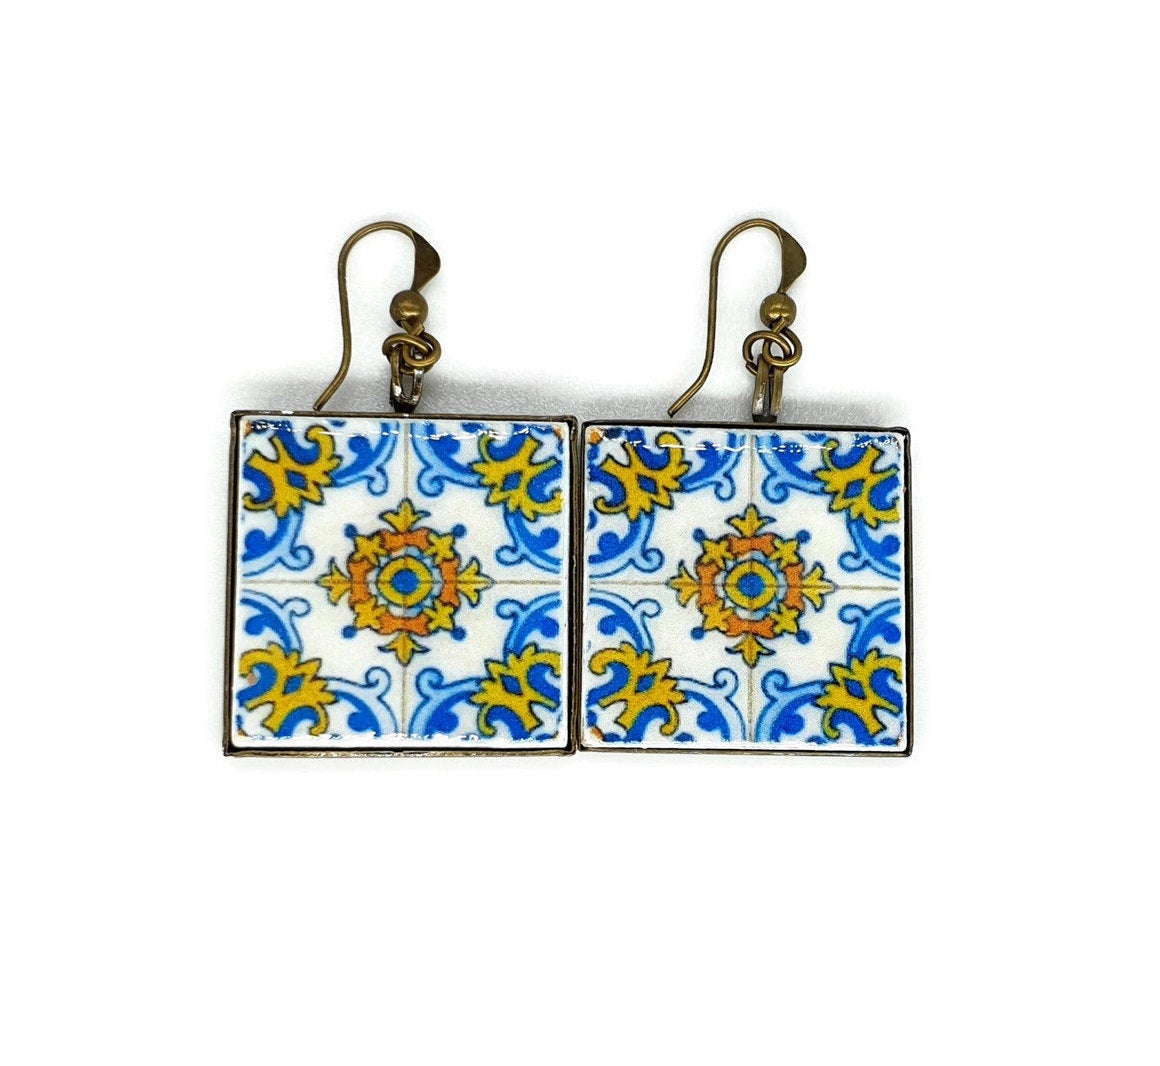 Portugal antique tile earrings, Portuguese tiles earrings, Portuguese jewelry, statement earrings, Portuguese gifts, boho earrings, azulejos - ineslamy